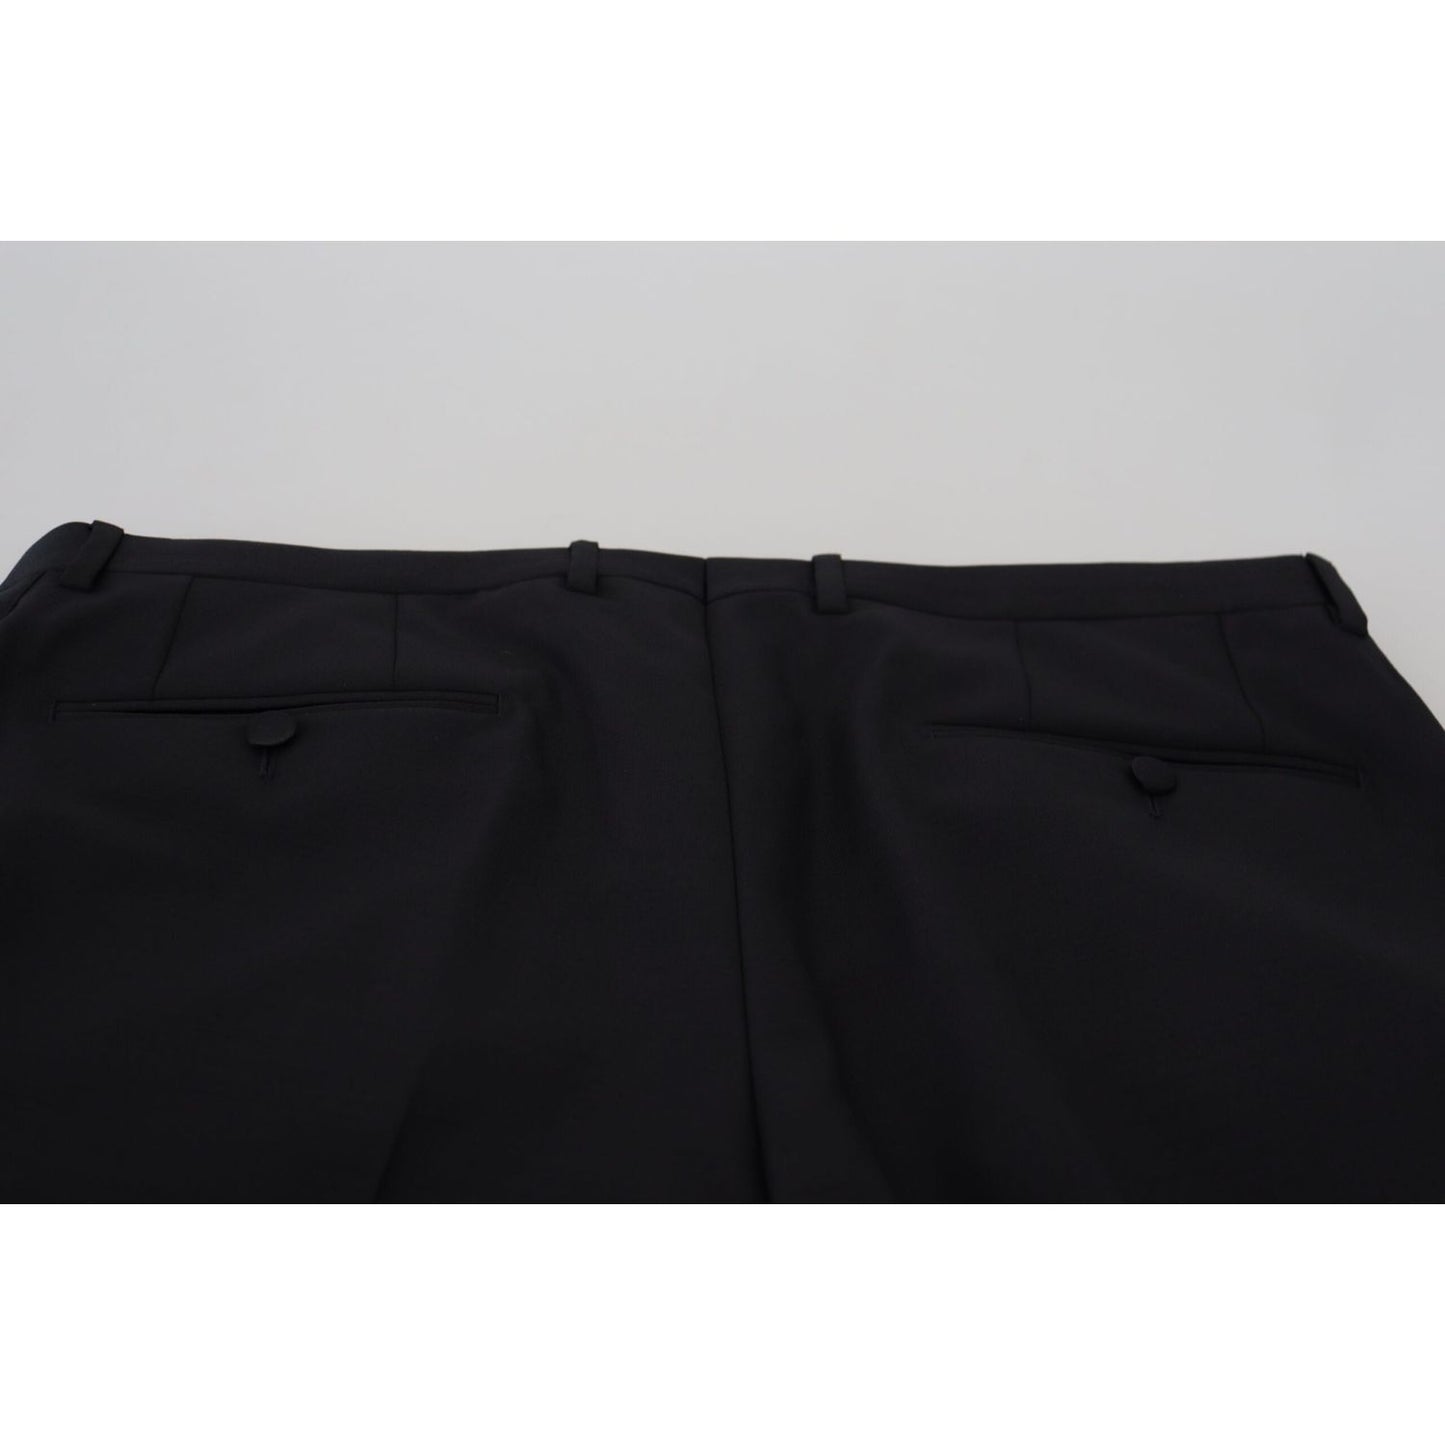 Dolce & Gabbana Elegant Black Dress Pants from Virgin Wool Blend black-wool-chino-dress-formal-pants